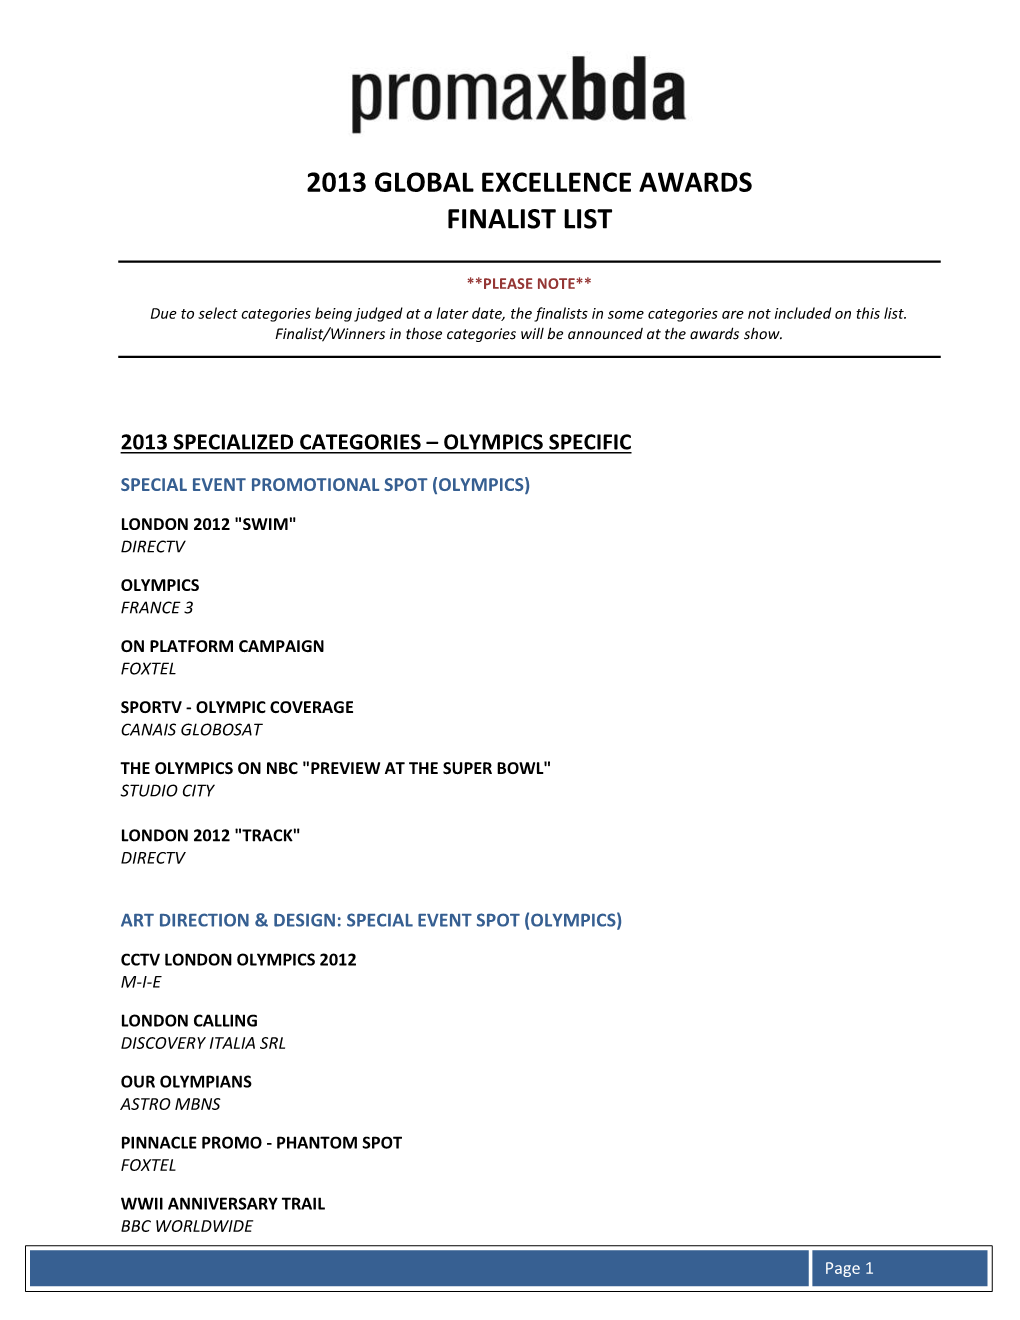 2013 Global Excellence Awards Finalist List